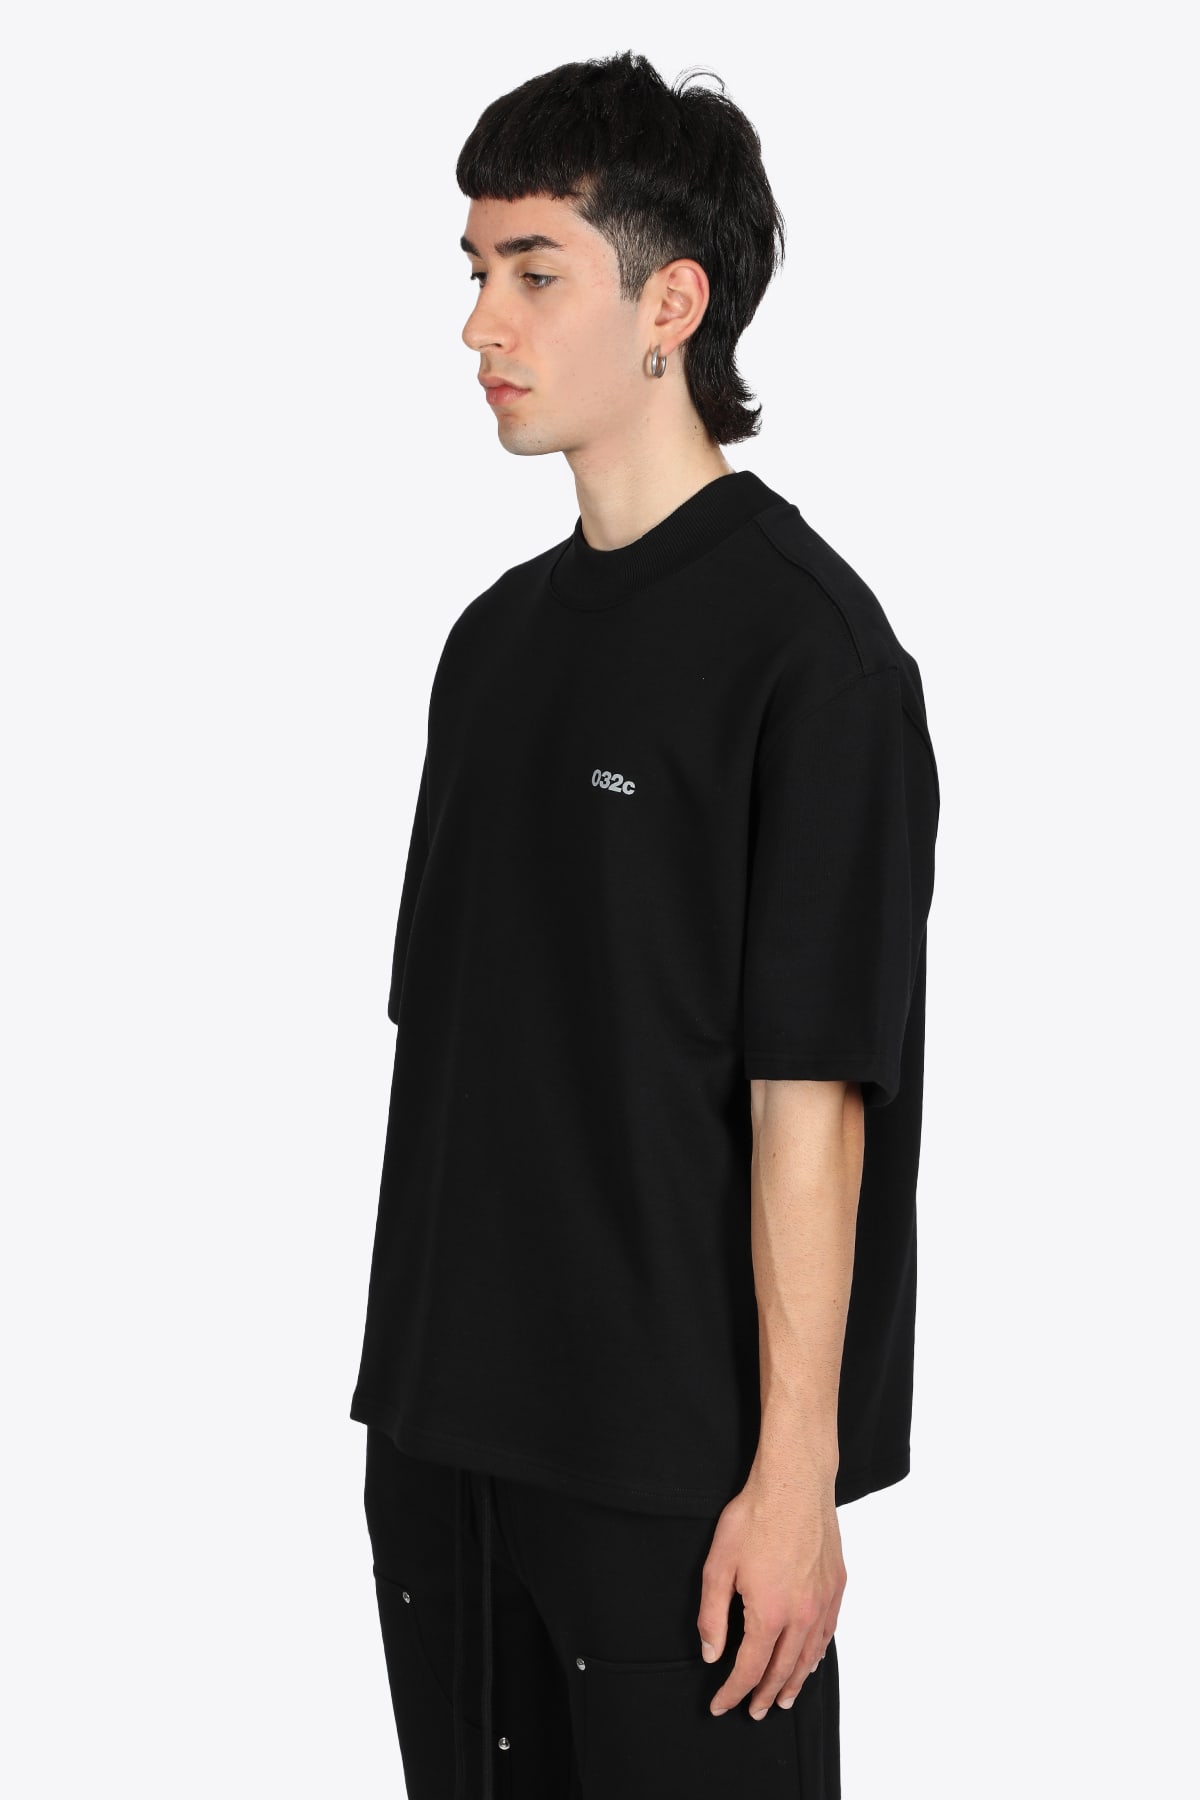 032c Heavy Black Cotton T-shirt | italist